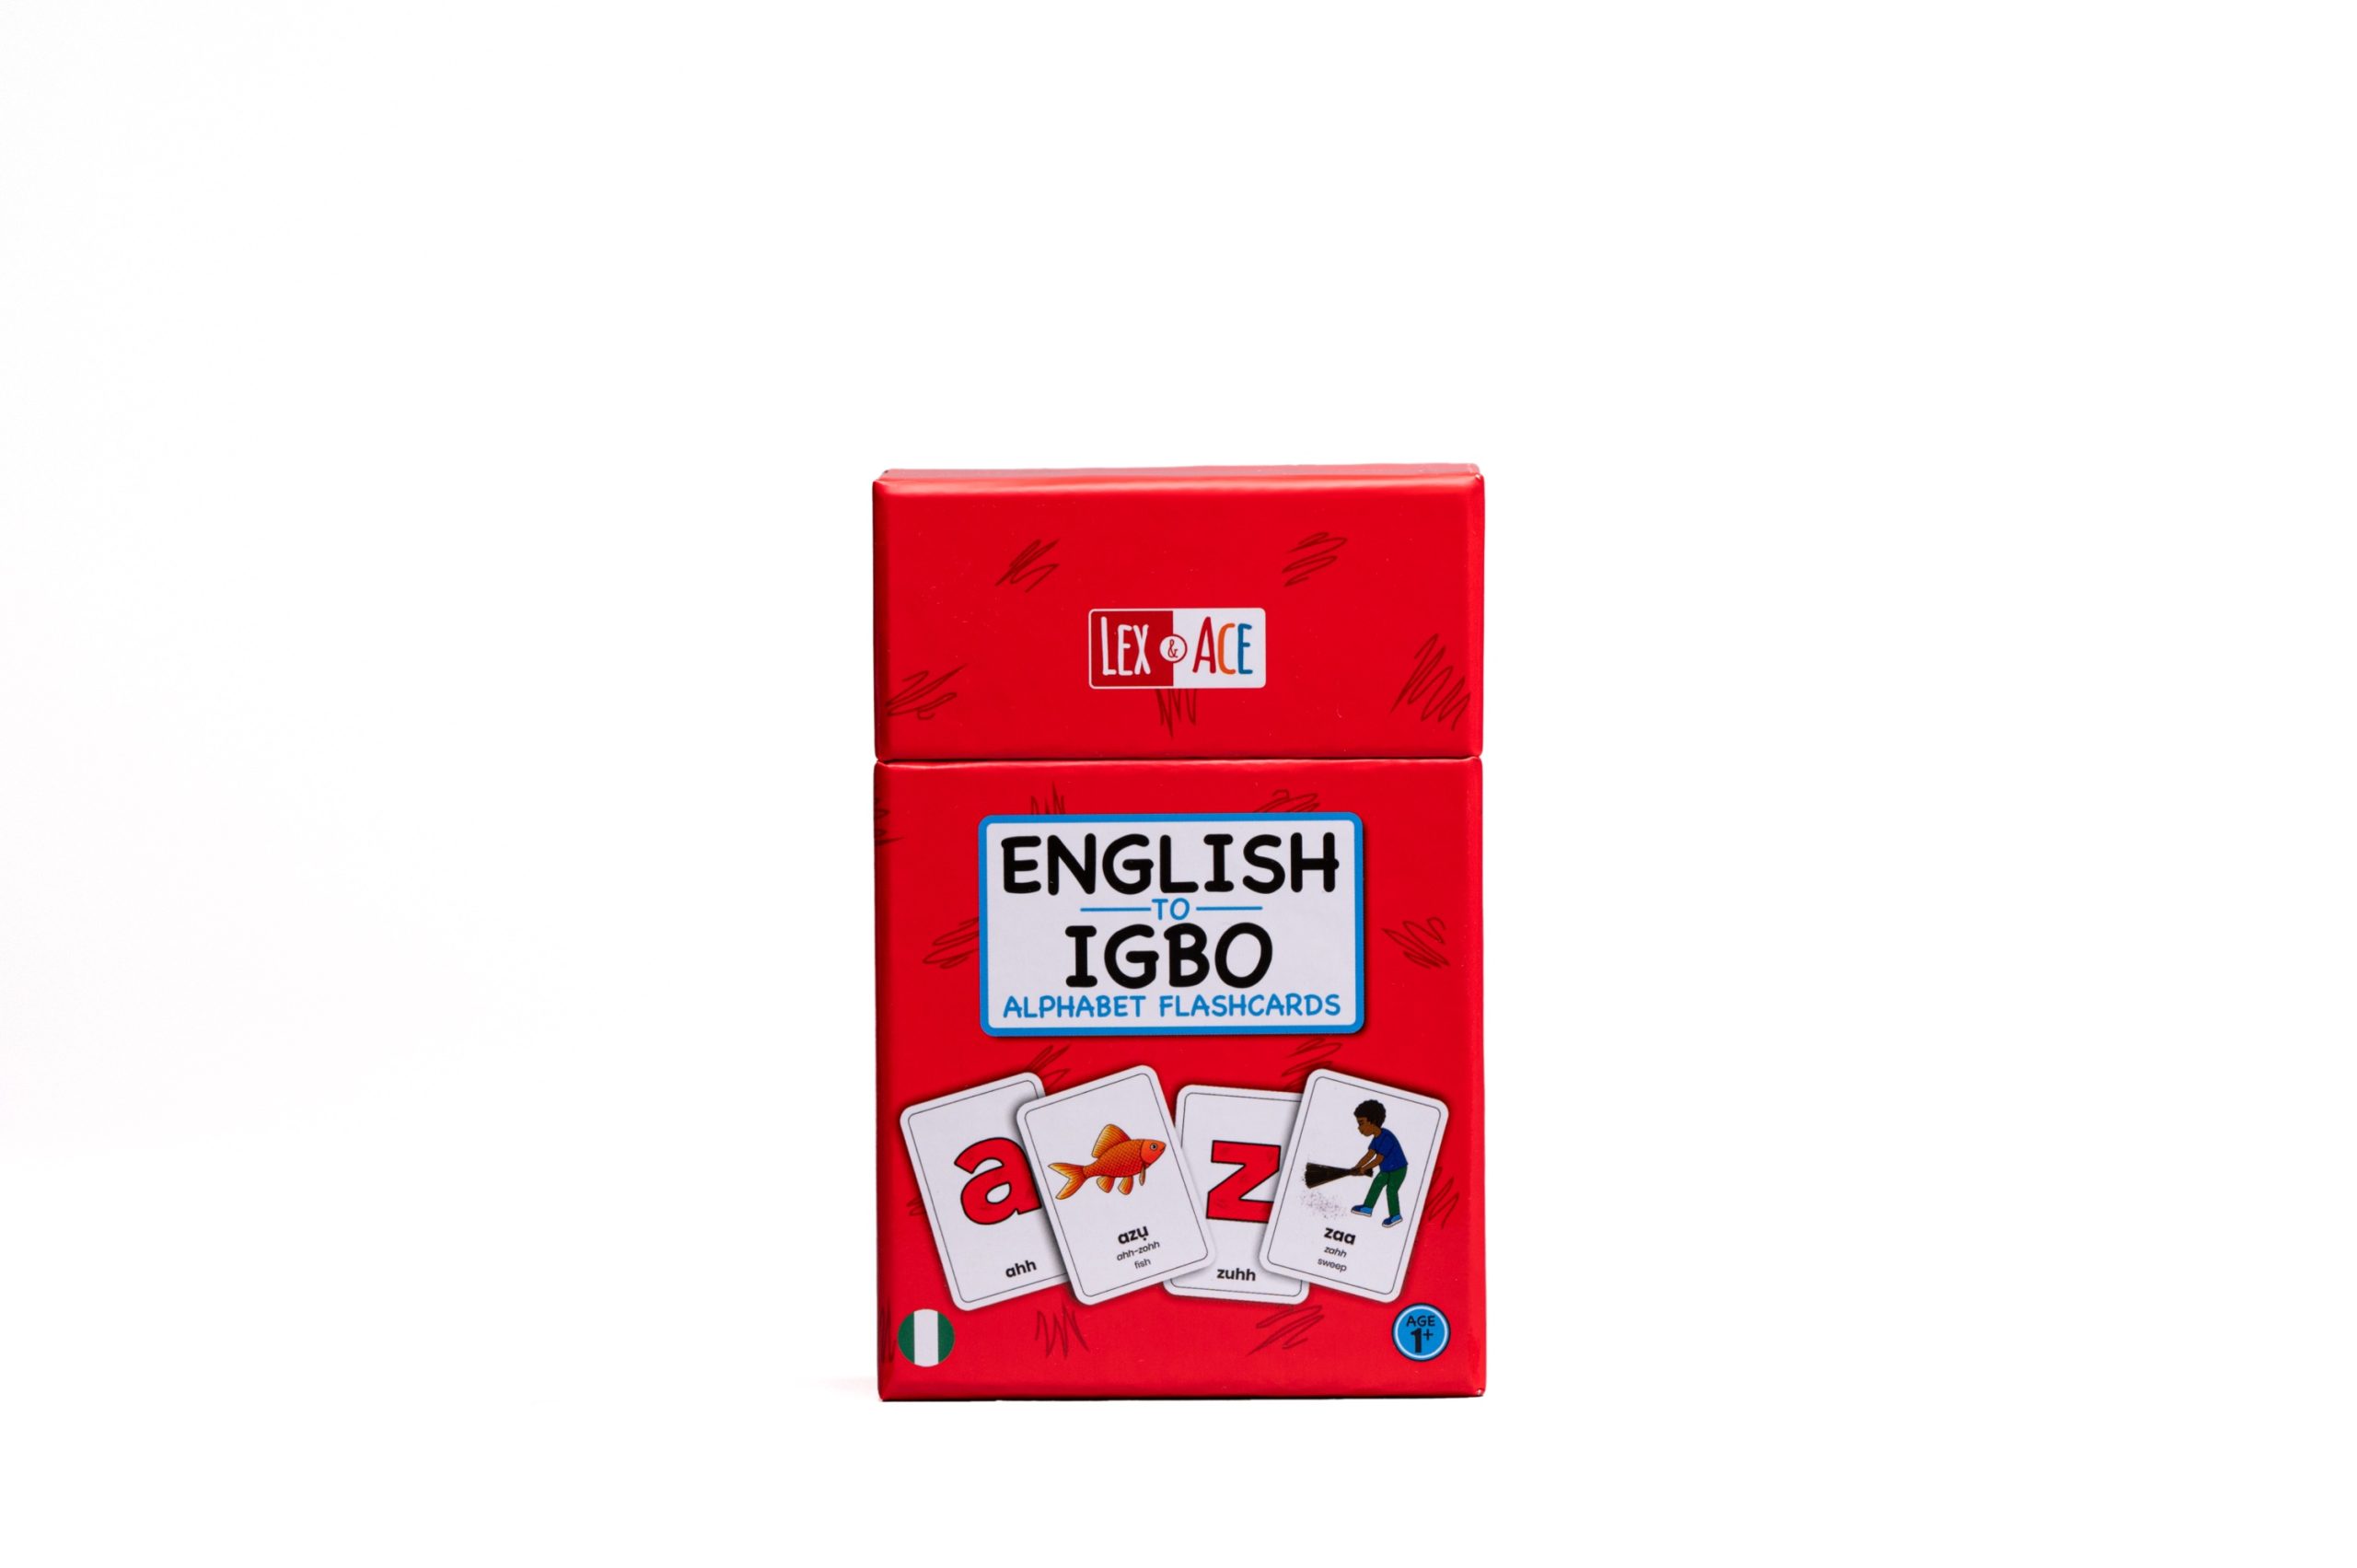 English to Igbo Alphabet Flashcards